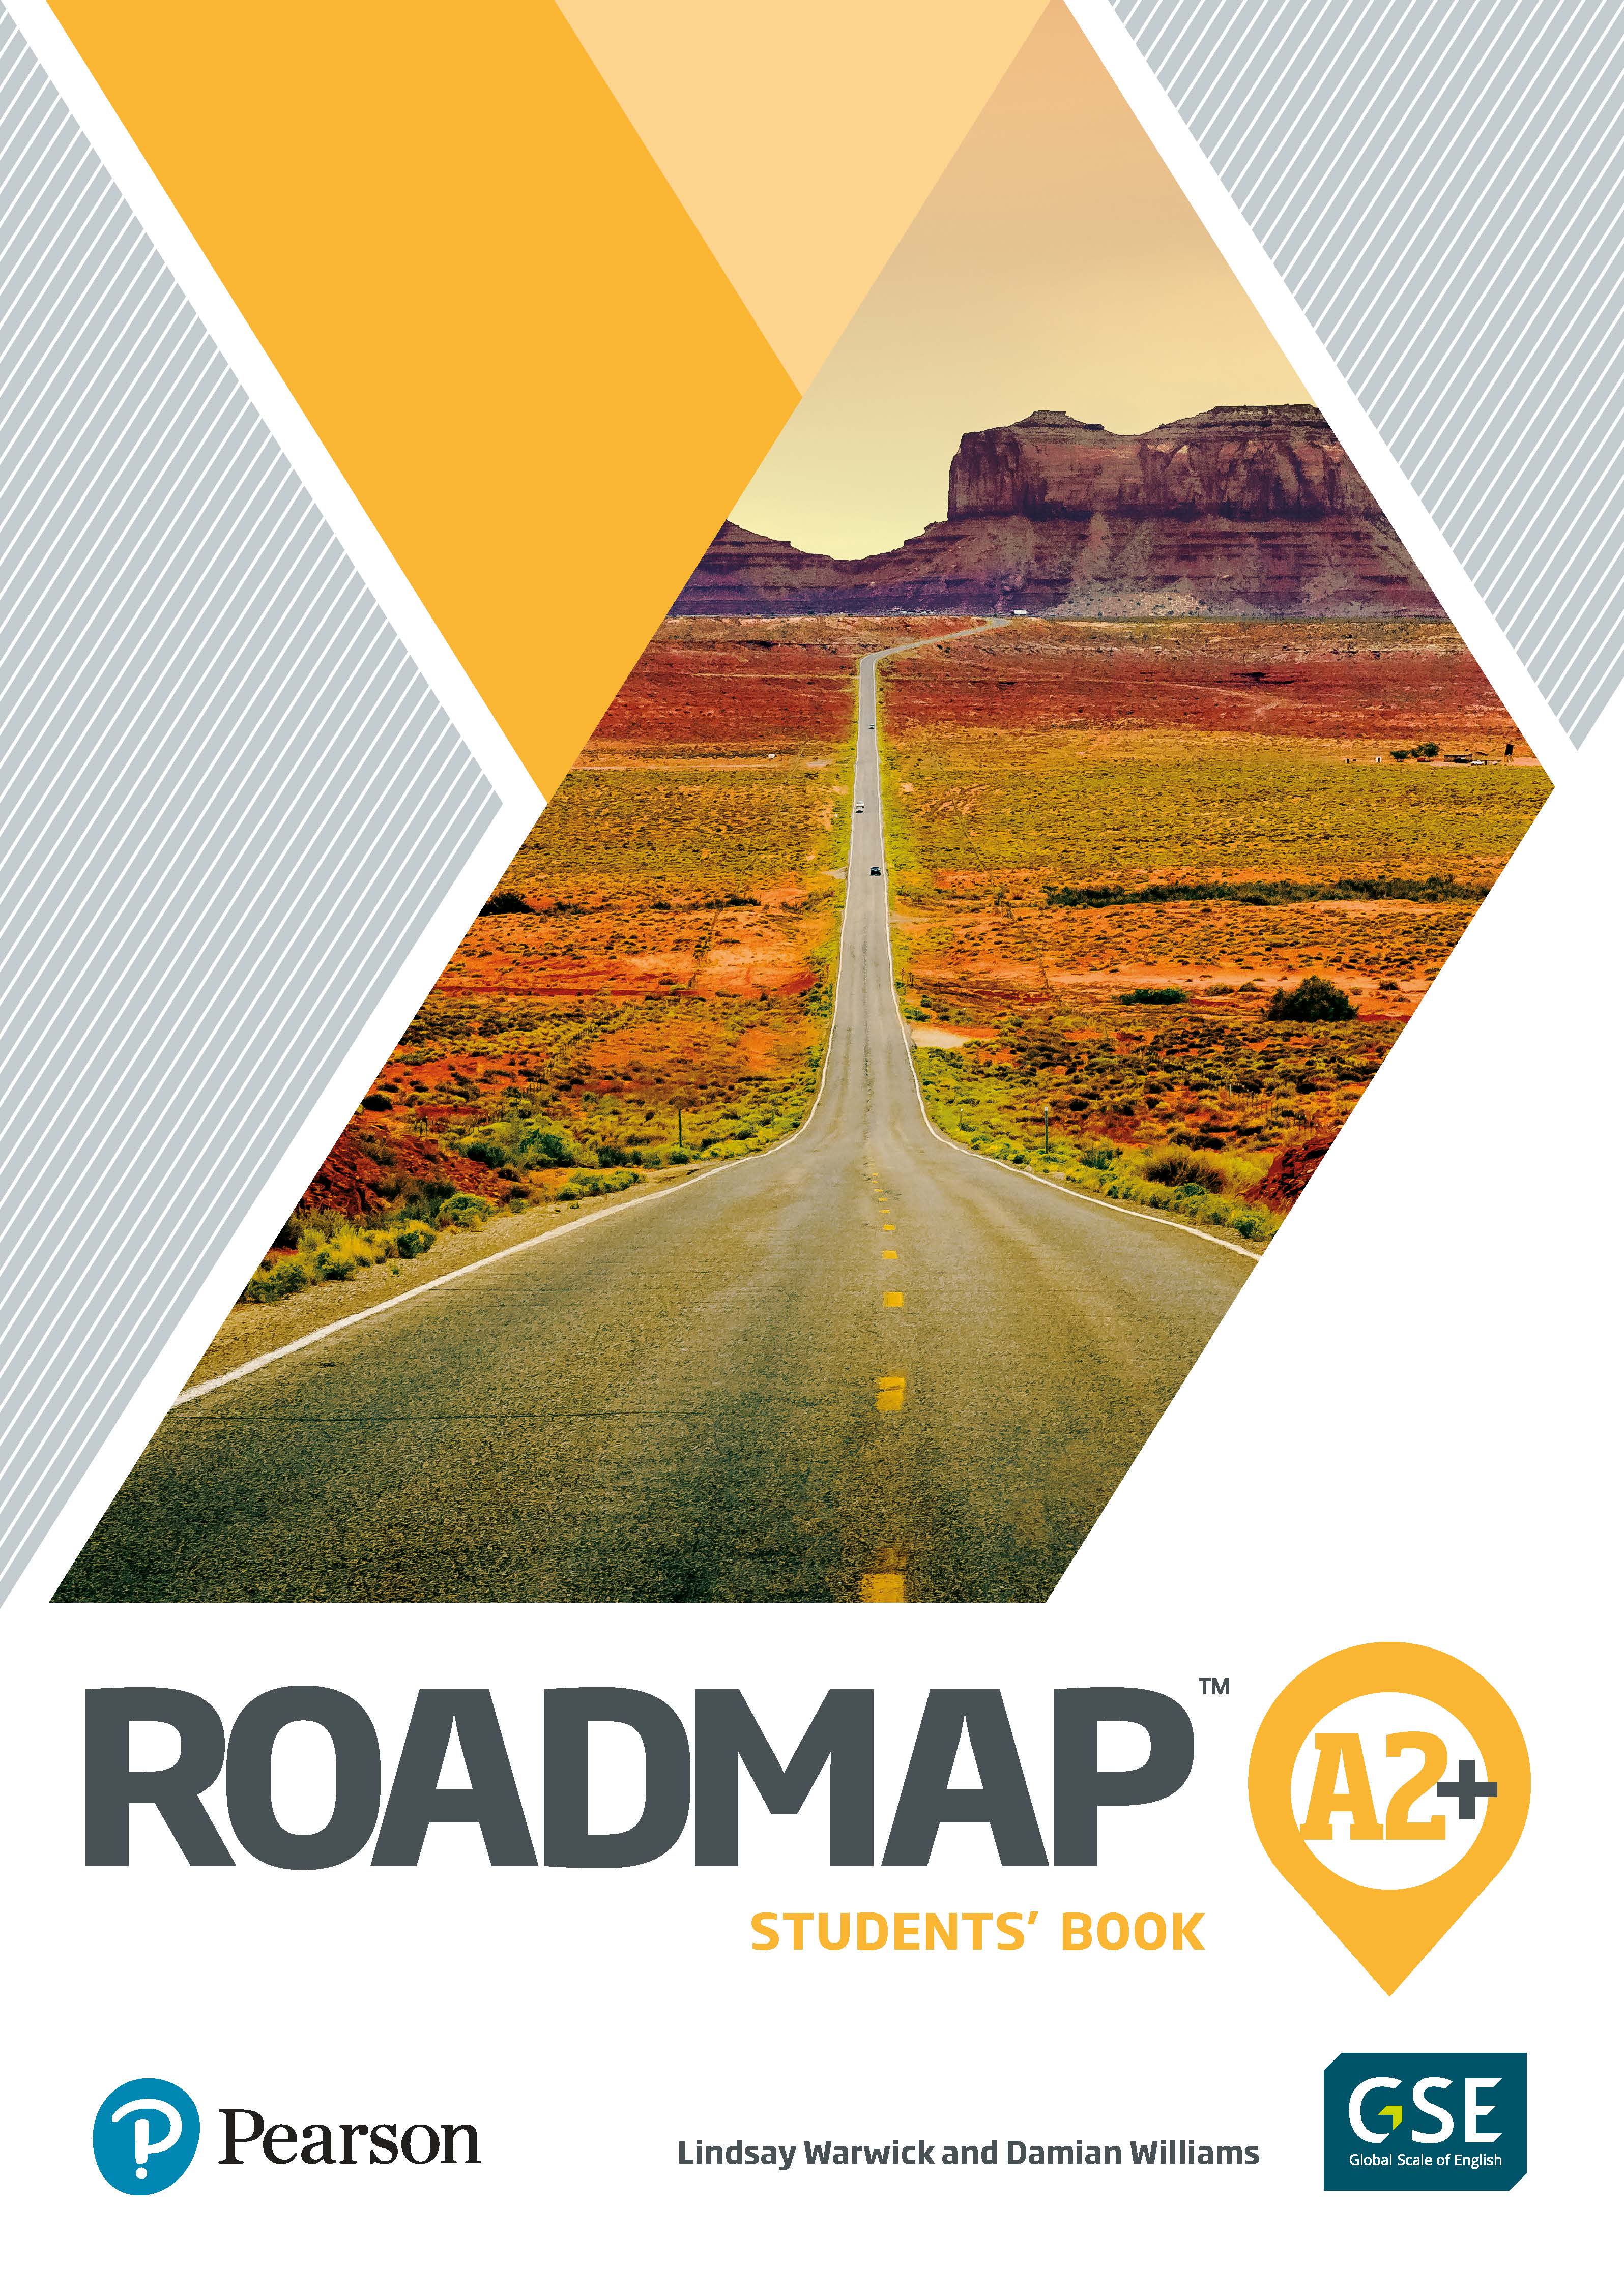 roadmap students book